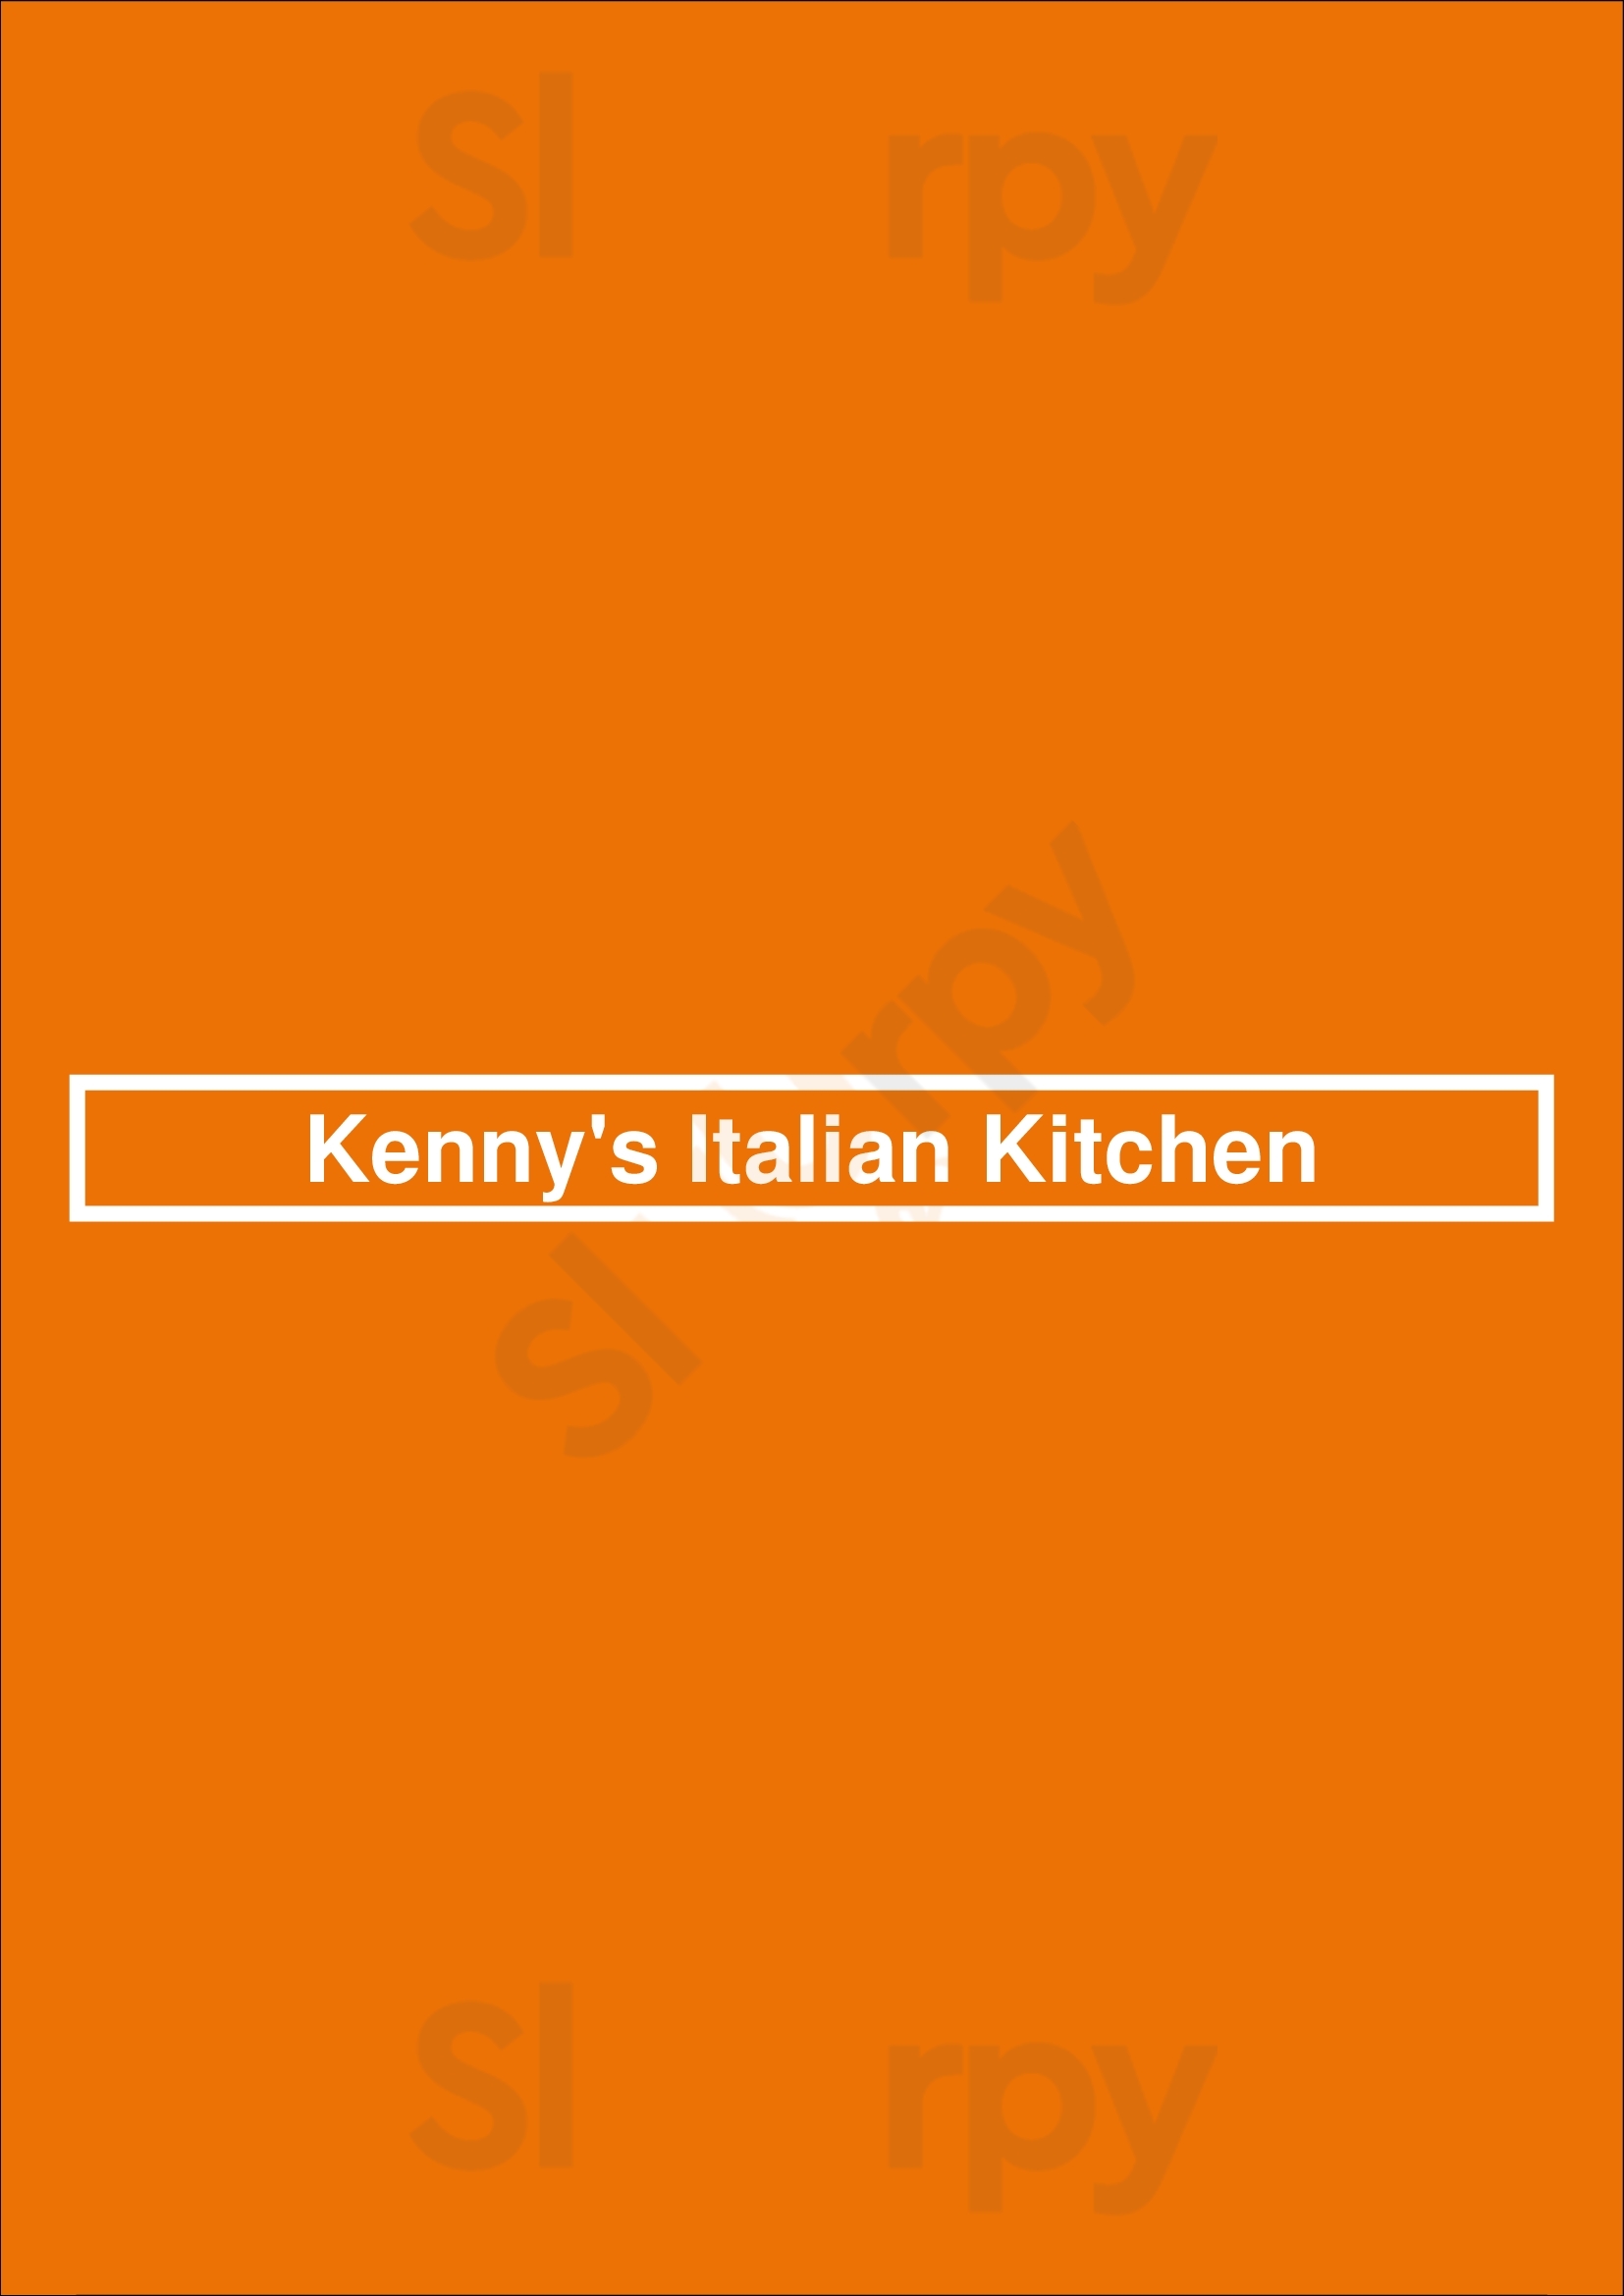 Kenny's Italian Kitchen Dallas Menu - 1